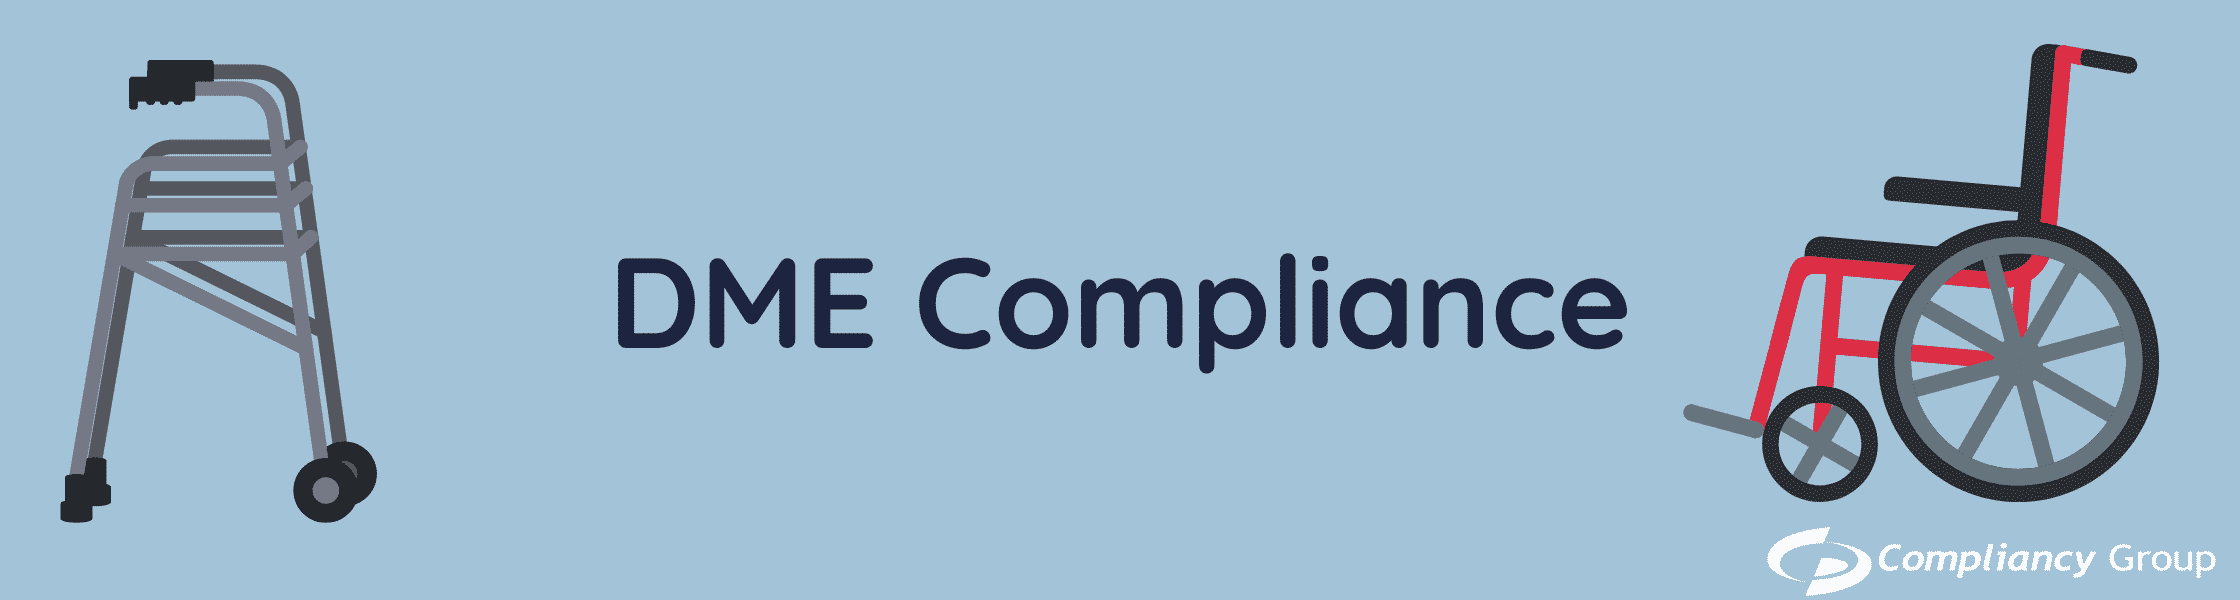 DME Compliance HIPAA